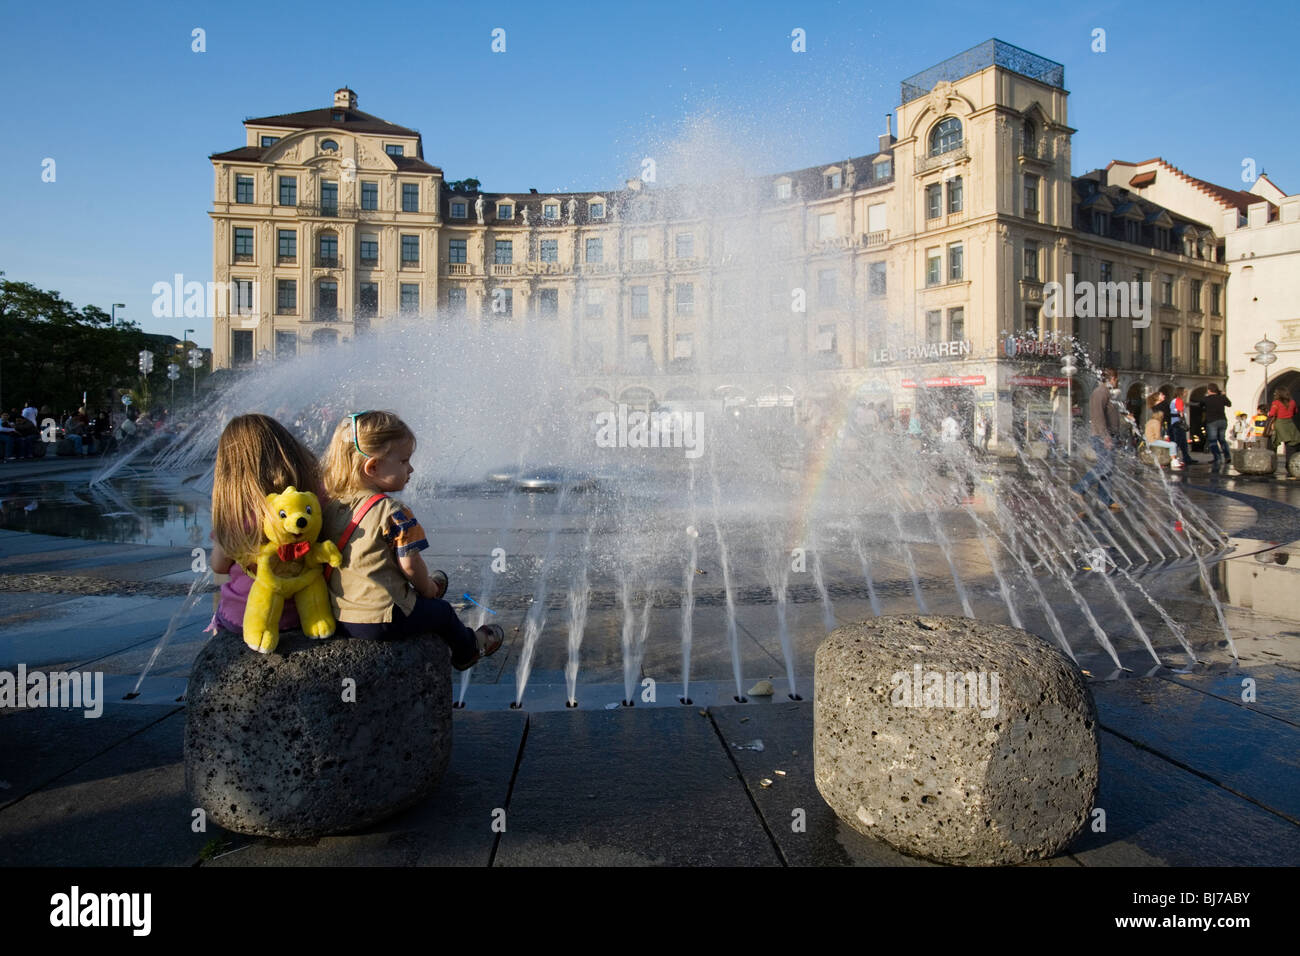 Two young girls in front of the Munich Marienplatz Fountain at Karlsplatz. Munich, Germany Stock Photo